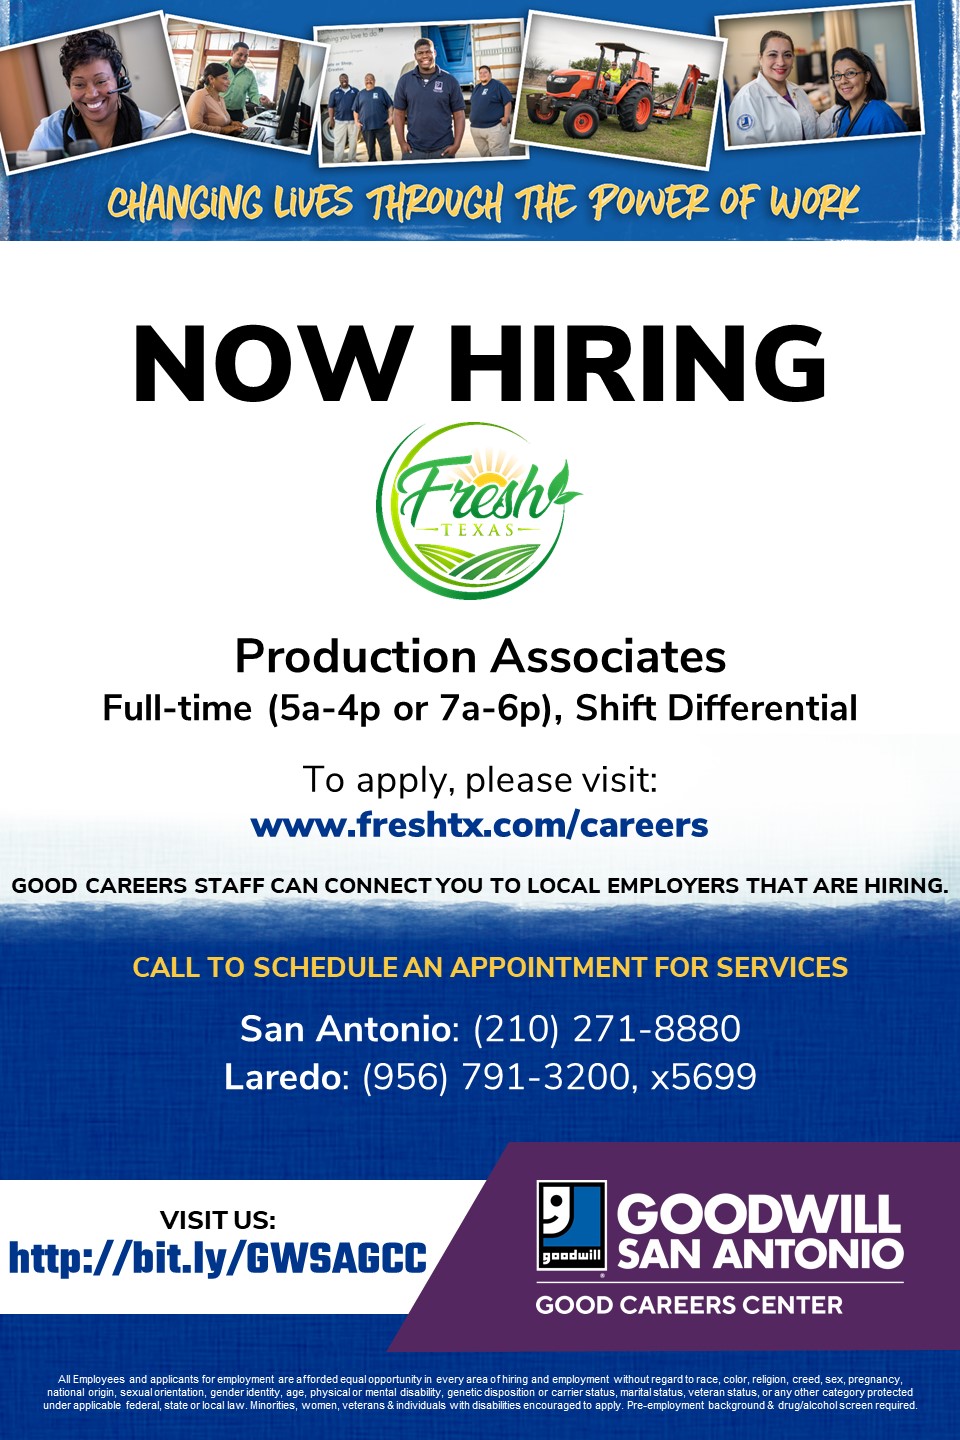 Fresh Texas hiring for production associates